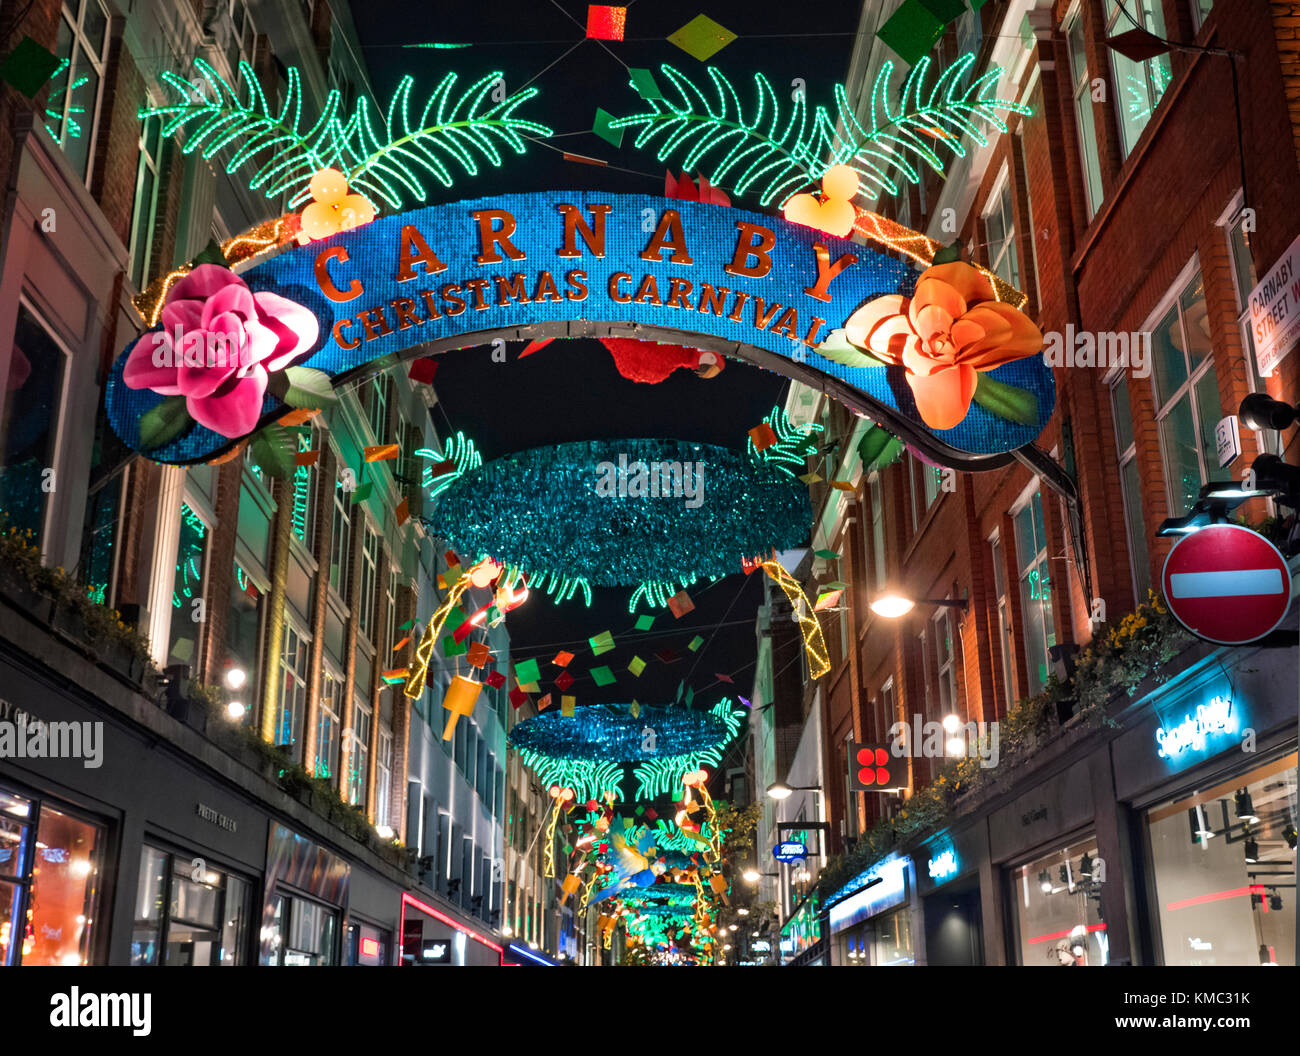 Carnaby Street Weihnachtsbeleuchtung 2017 Stockfoto